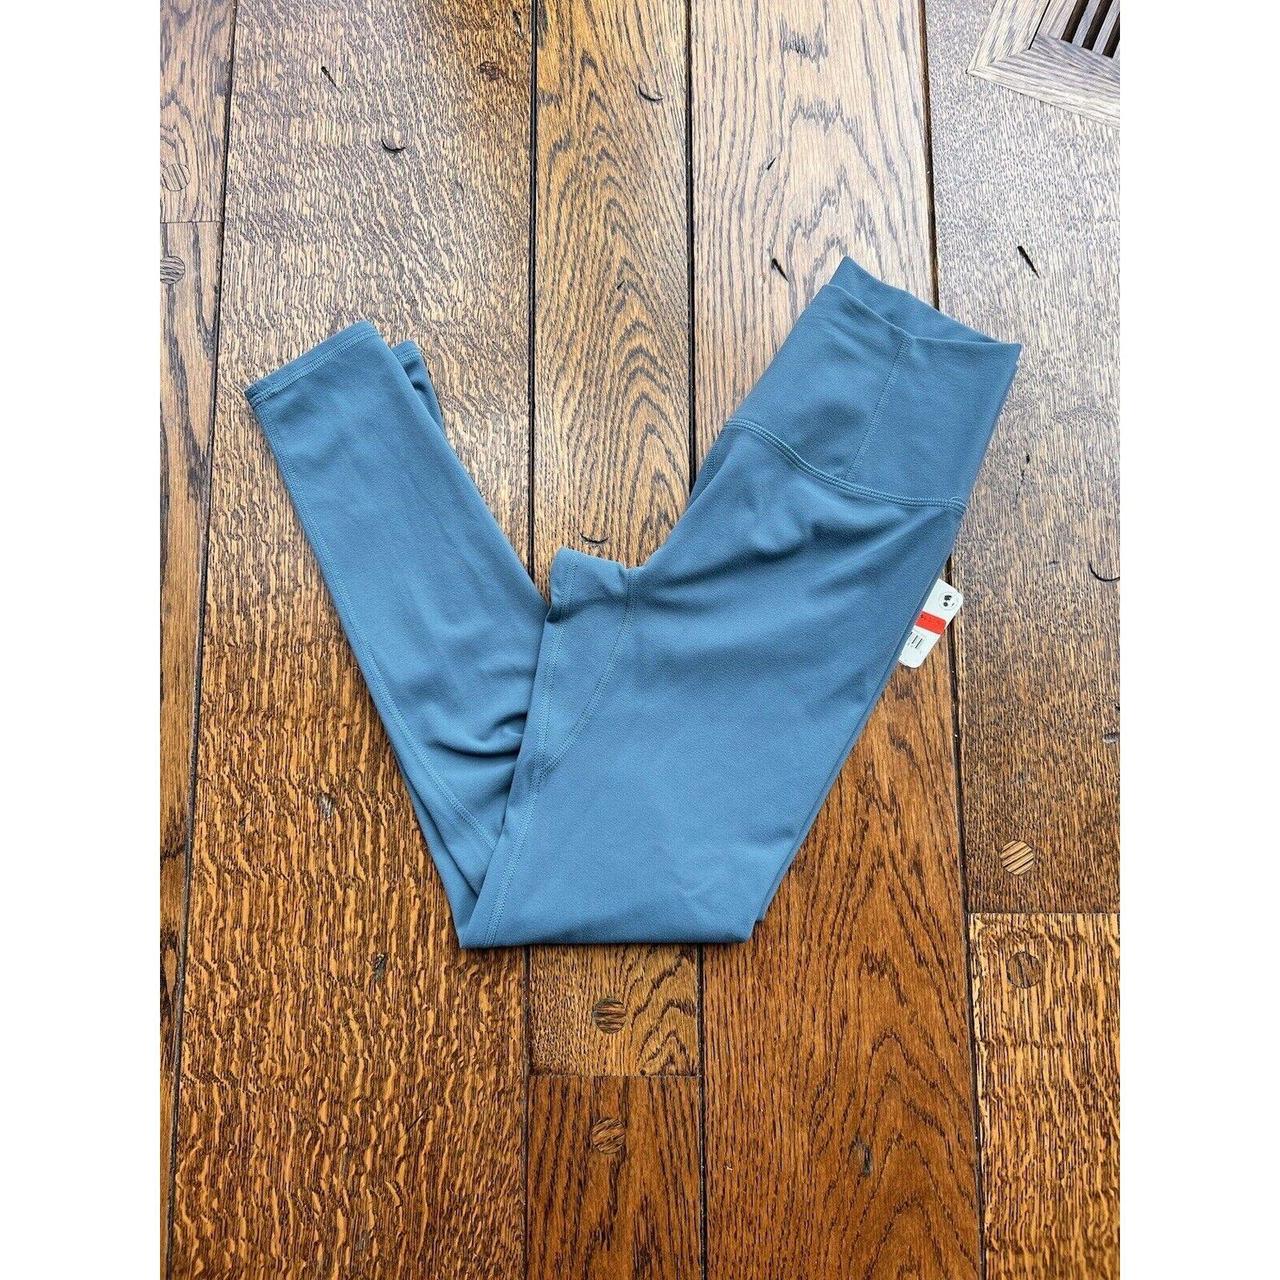 Medium BCG brand leggings. Polyester/ spandex mix - Depop